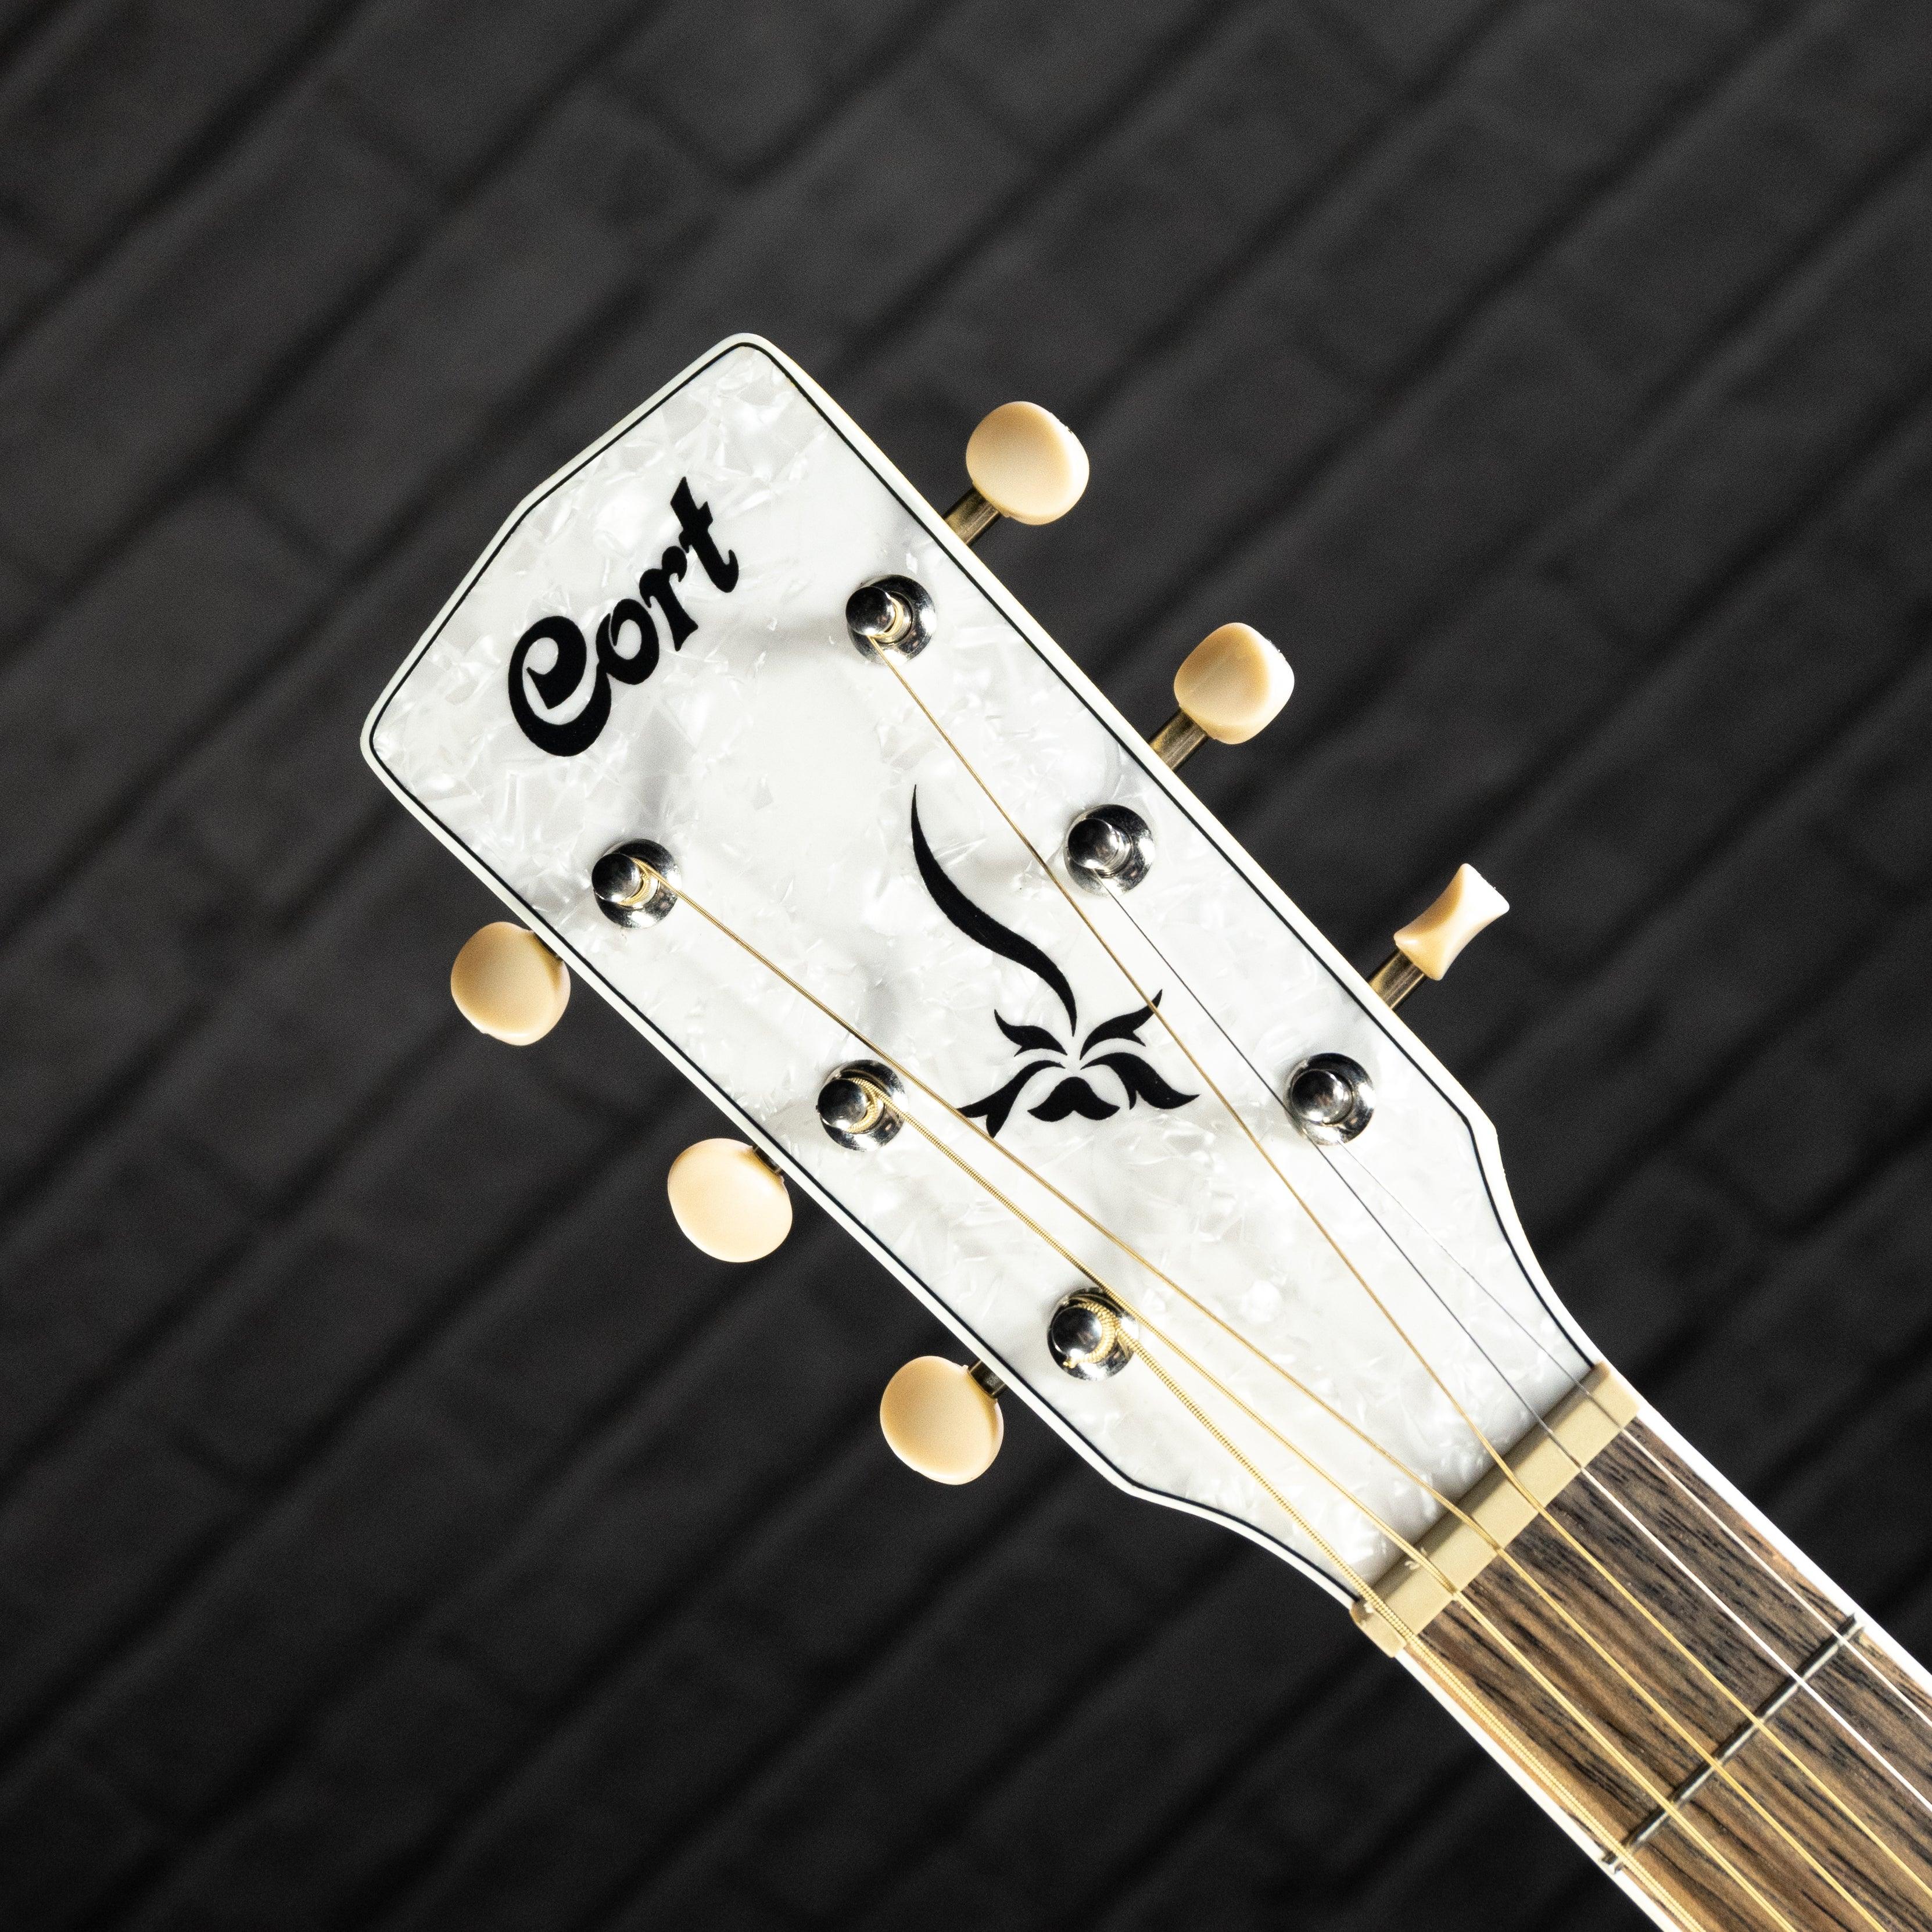 Cort Jade Series Acoustic/Electric Guitar (Pastel Yellow Open Pore) - Impulse Music Co.